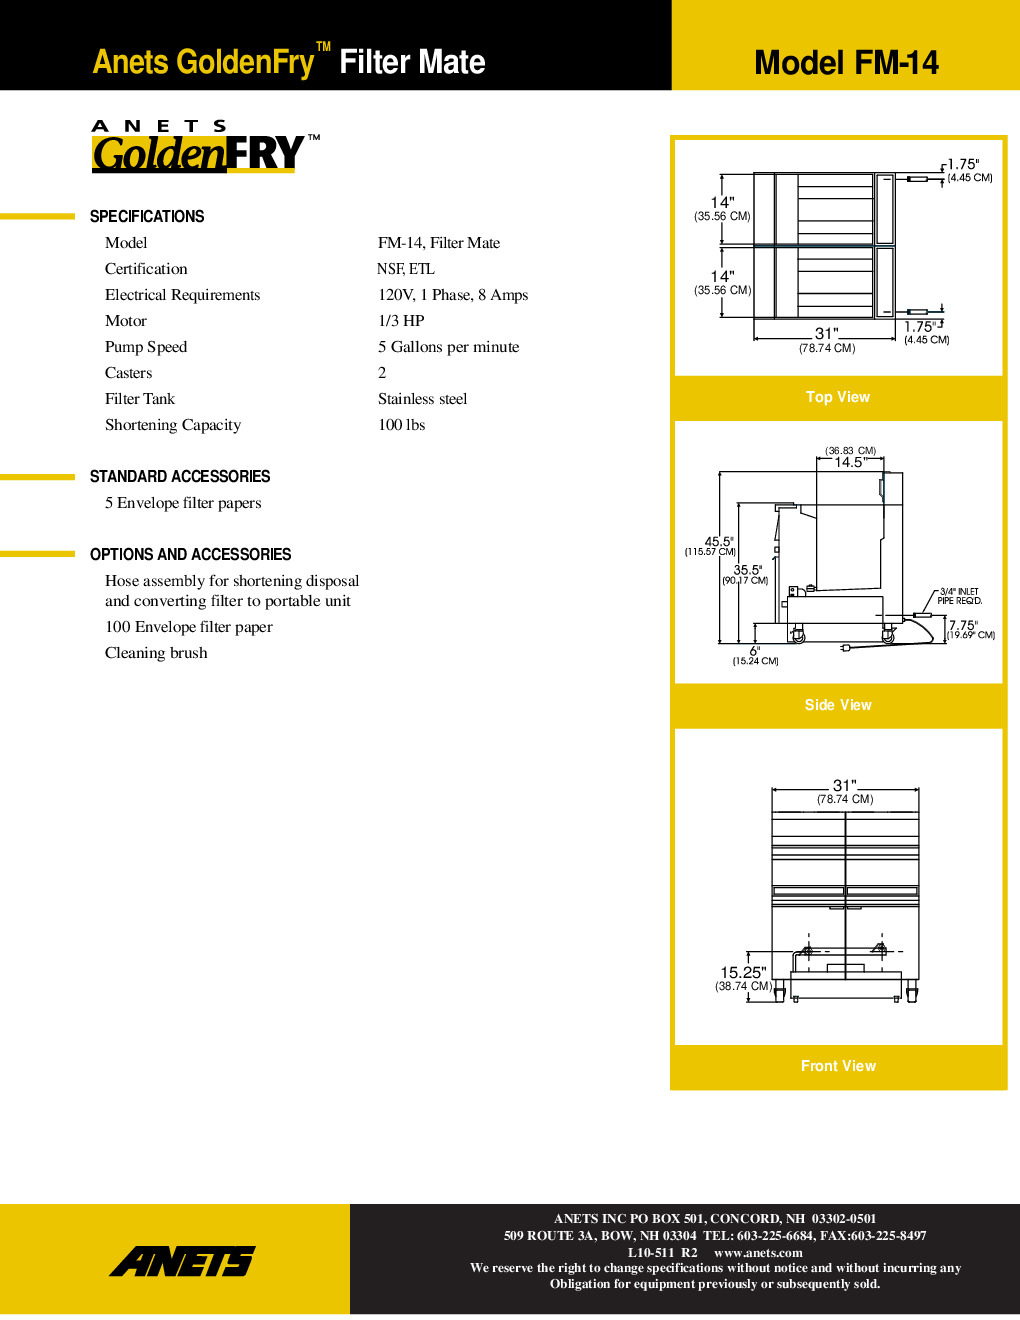 ANETS FM-14-1 Built-In Fryer Filter Drawer Design w/ 100-Lb Capacity, Filter Starter Kit, 5 GPM